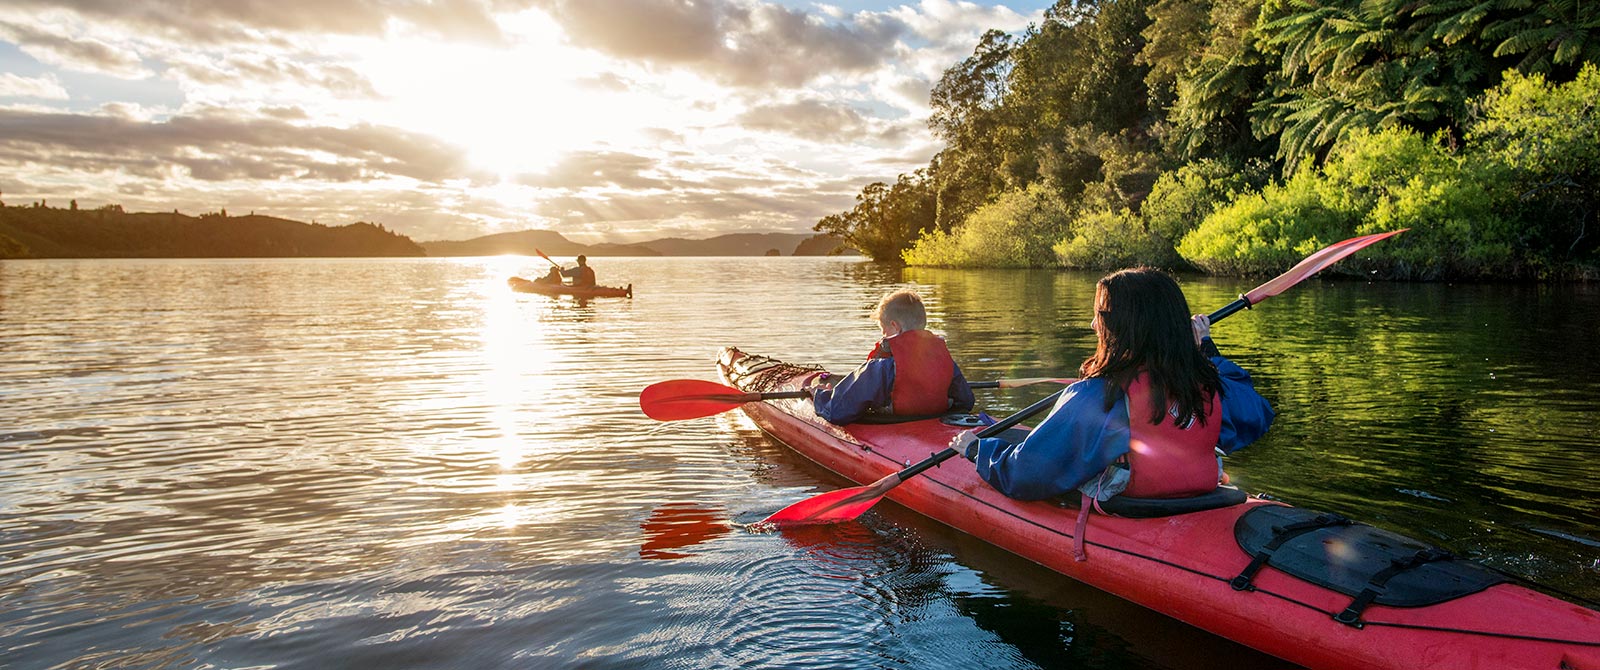 Kayaking on Lake Rotoiti, Rotorua - Book Your Trip to New Zealand - New Zealand Travel Agency